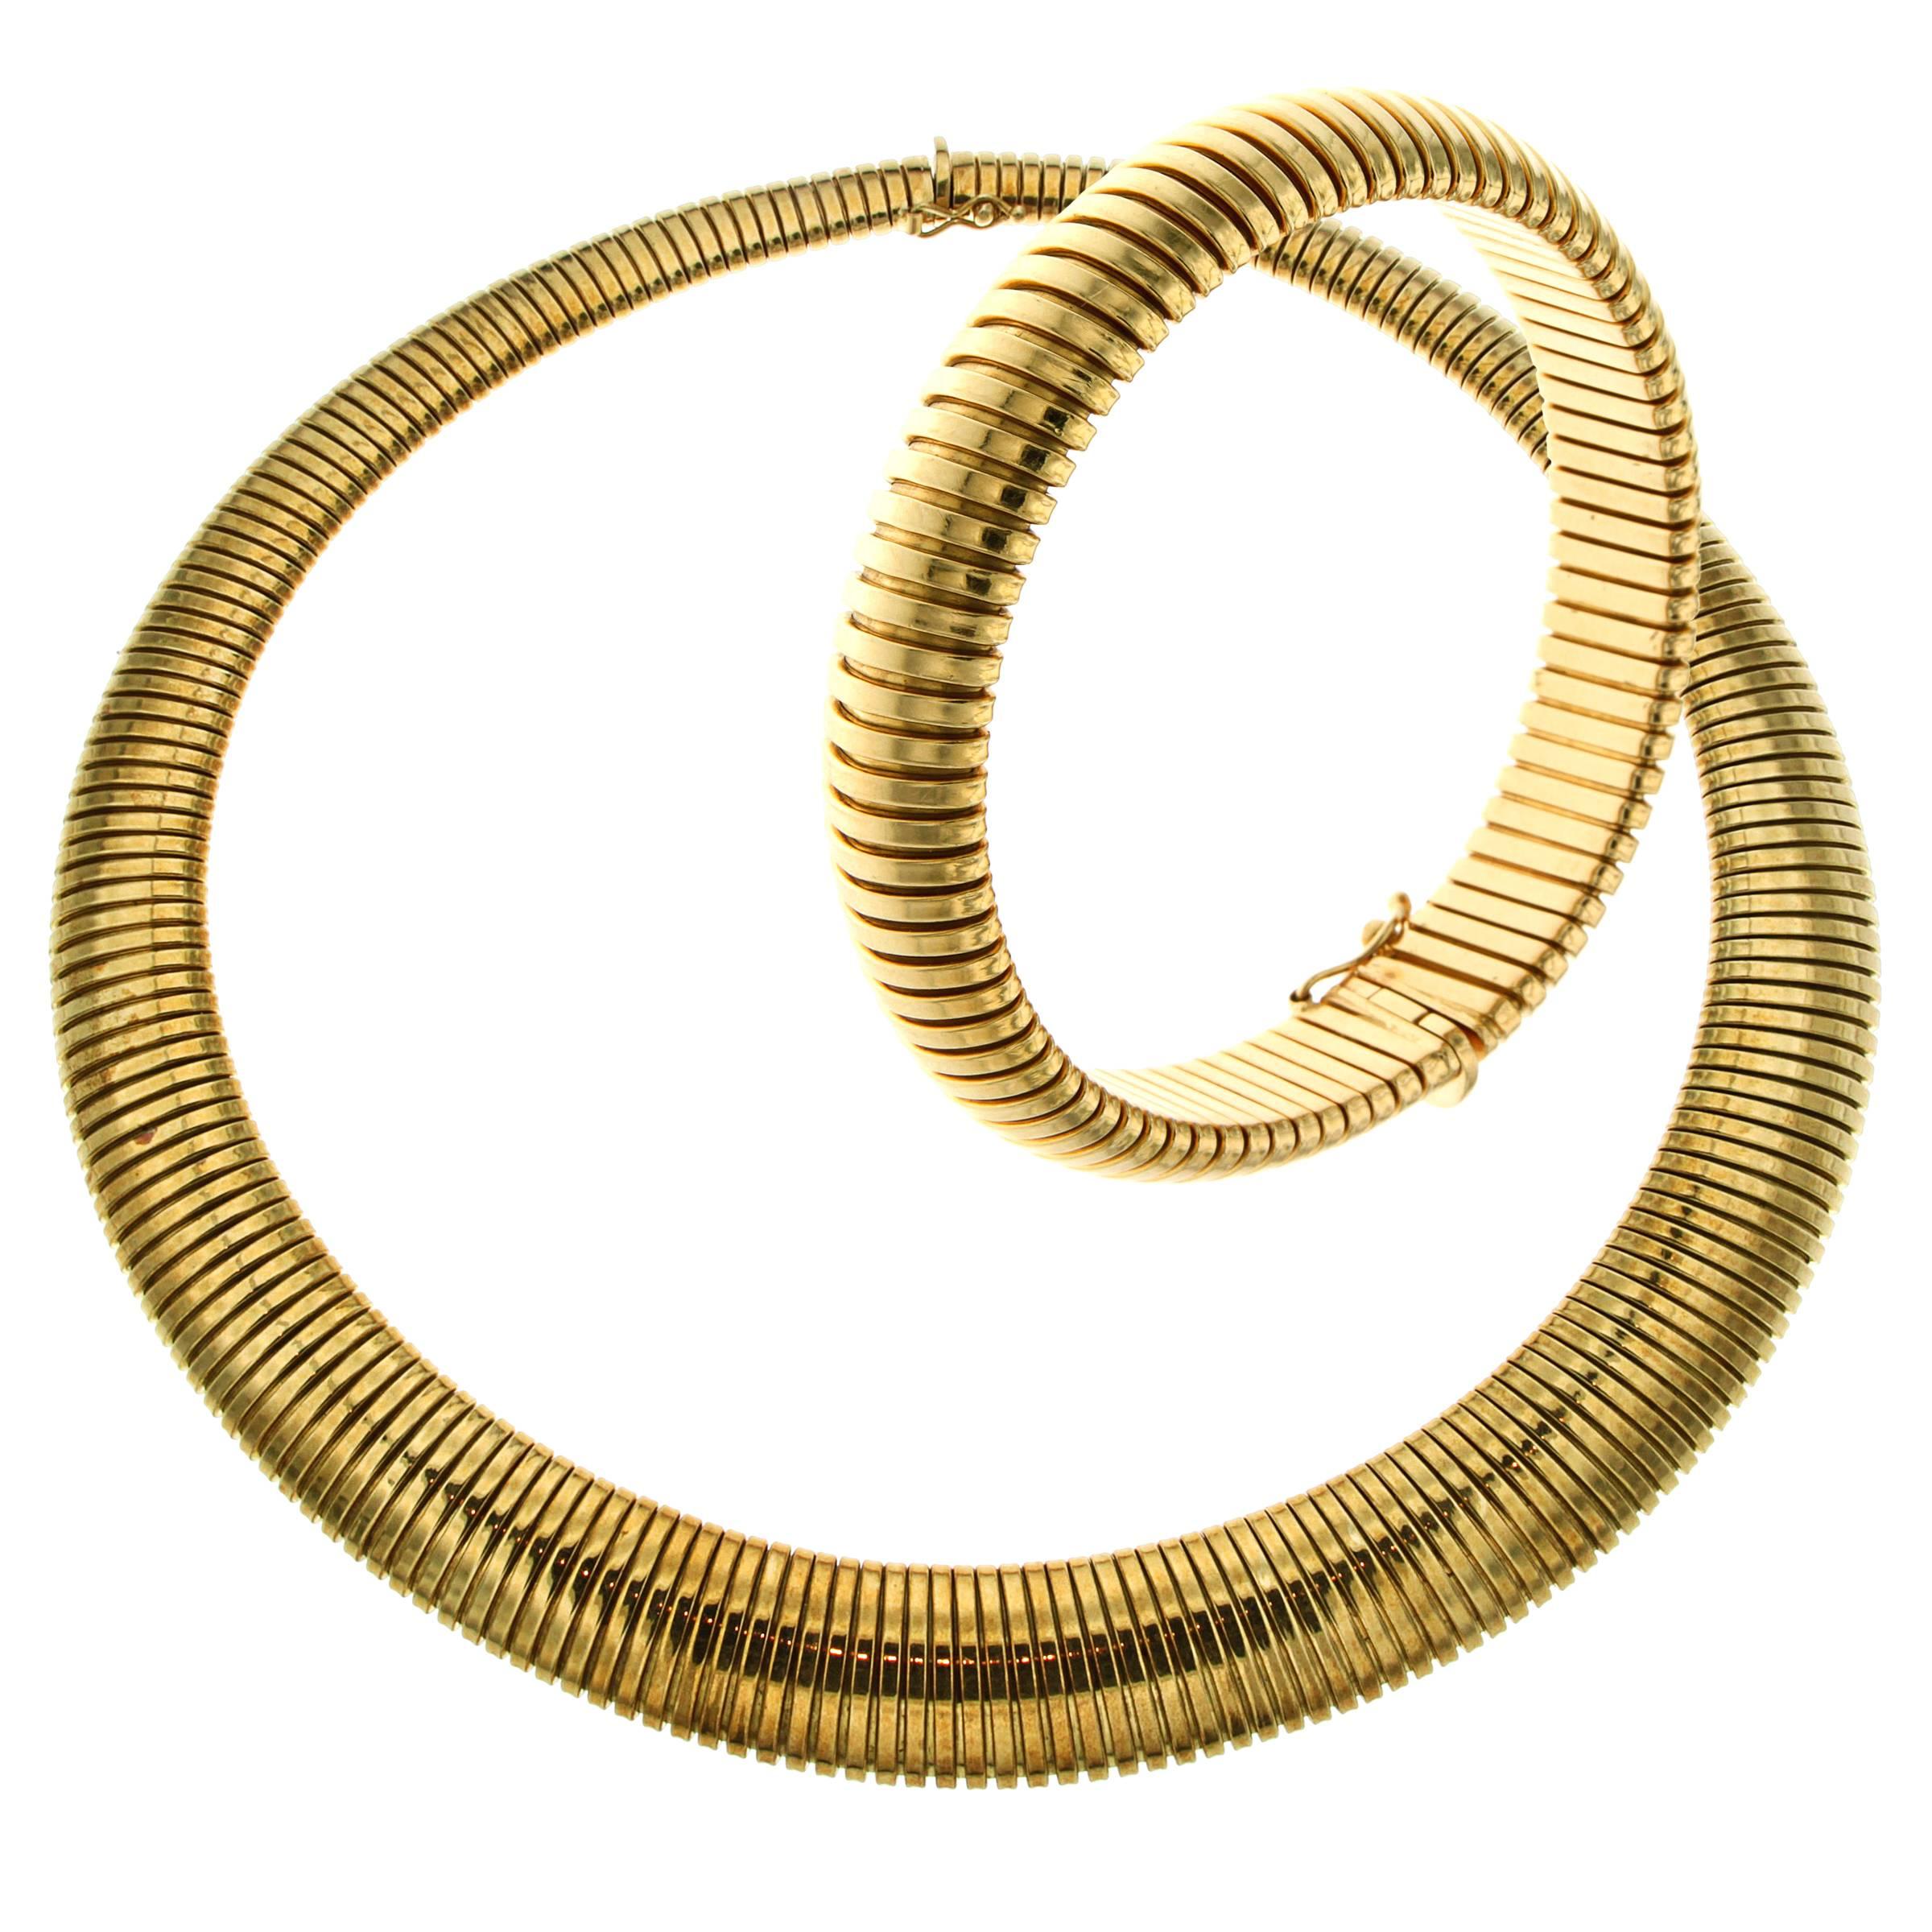 Yellow Gold Bracelet Necklace Set Tubogas, 1980s